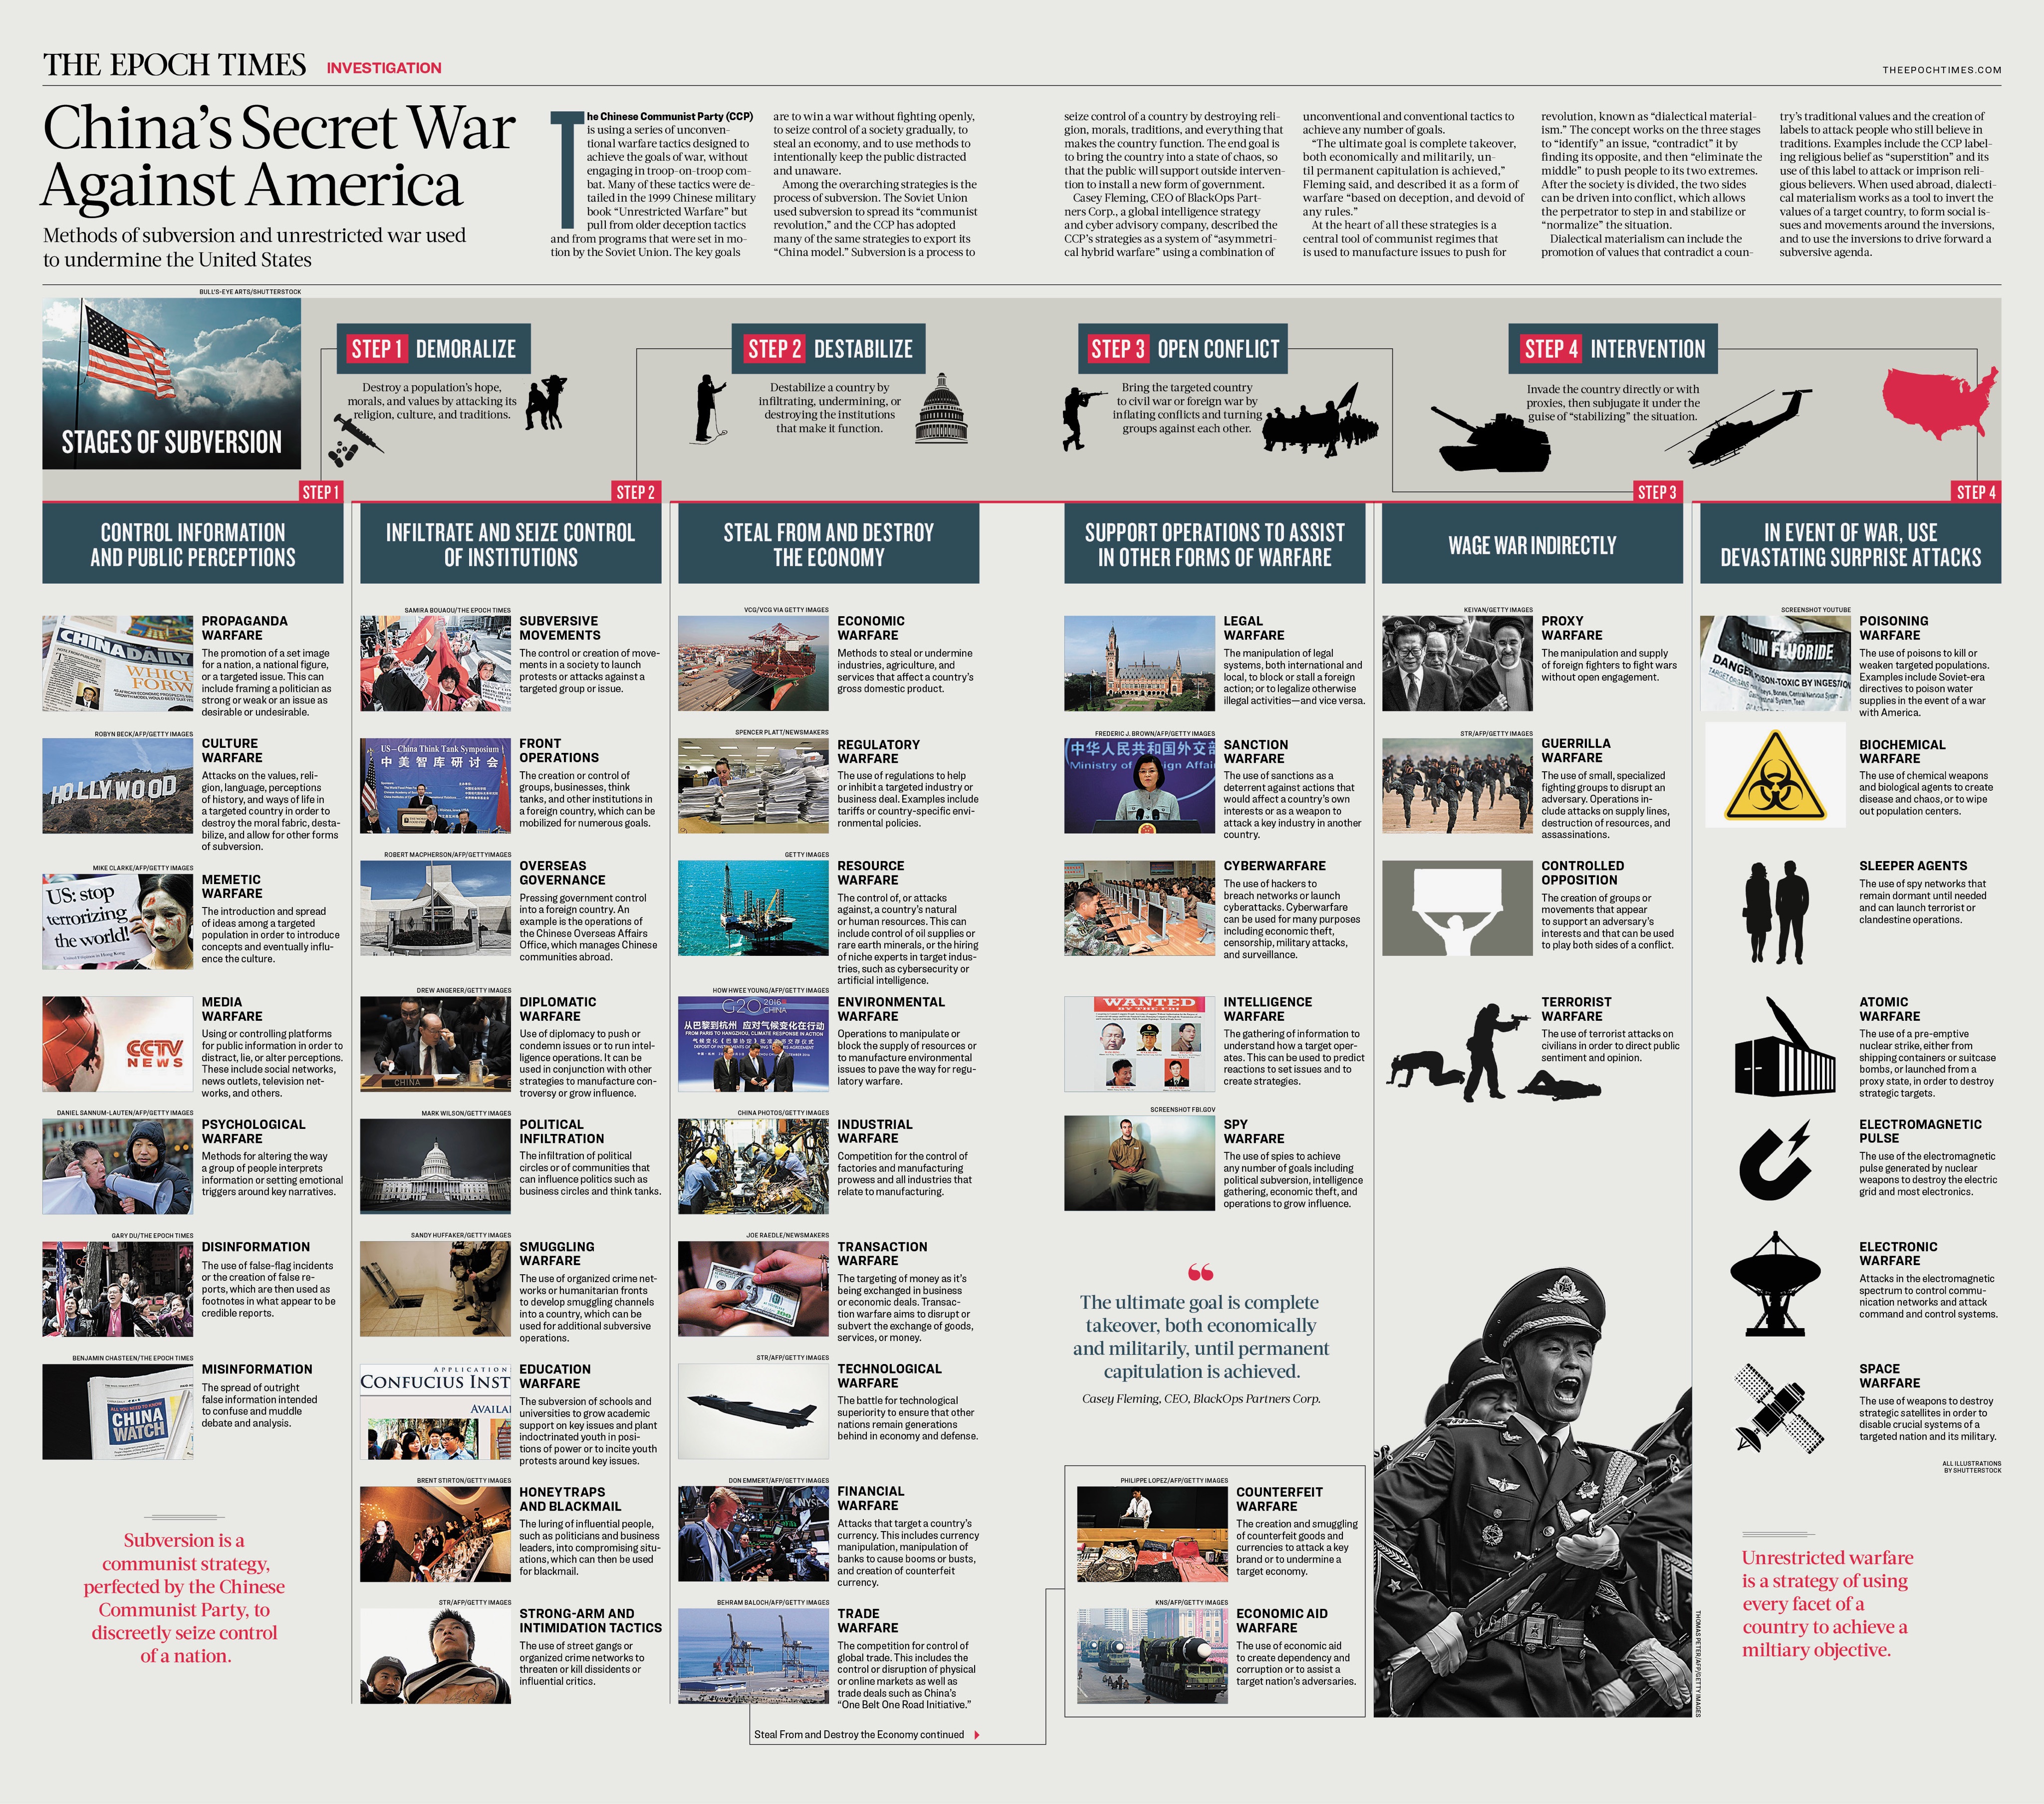 Kina i zvanično potisnula SAD sa mjesta druge vojne sile - Page 2 Chinas_Secret_War_Against_America_Epoch-Times_Infographic